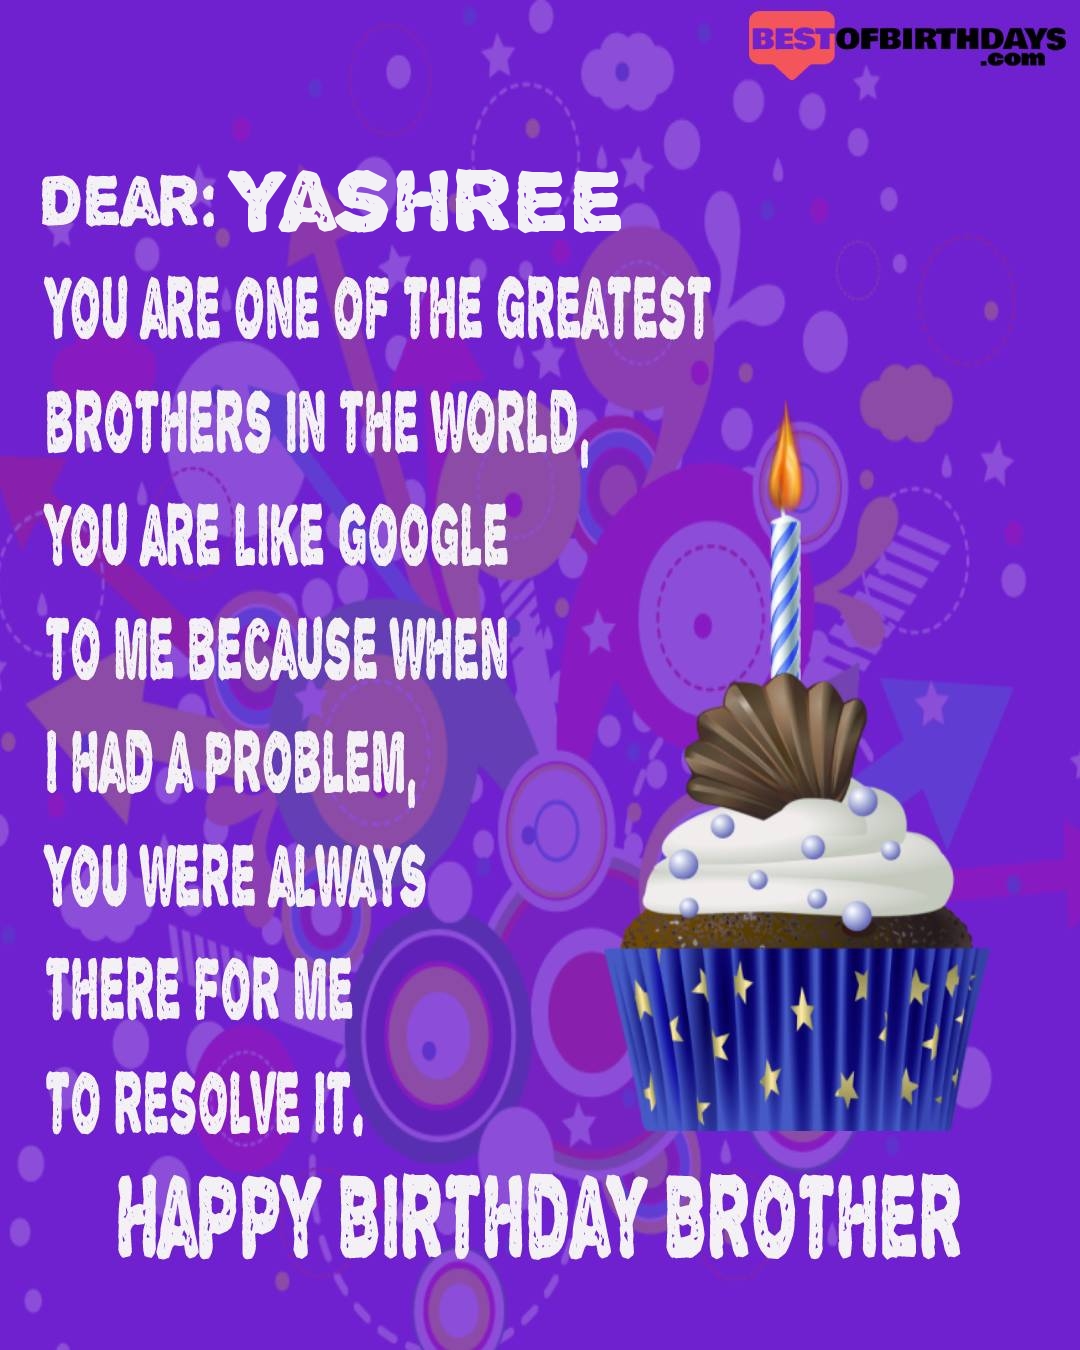 Happy birthday yashree bhai brother bro